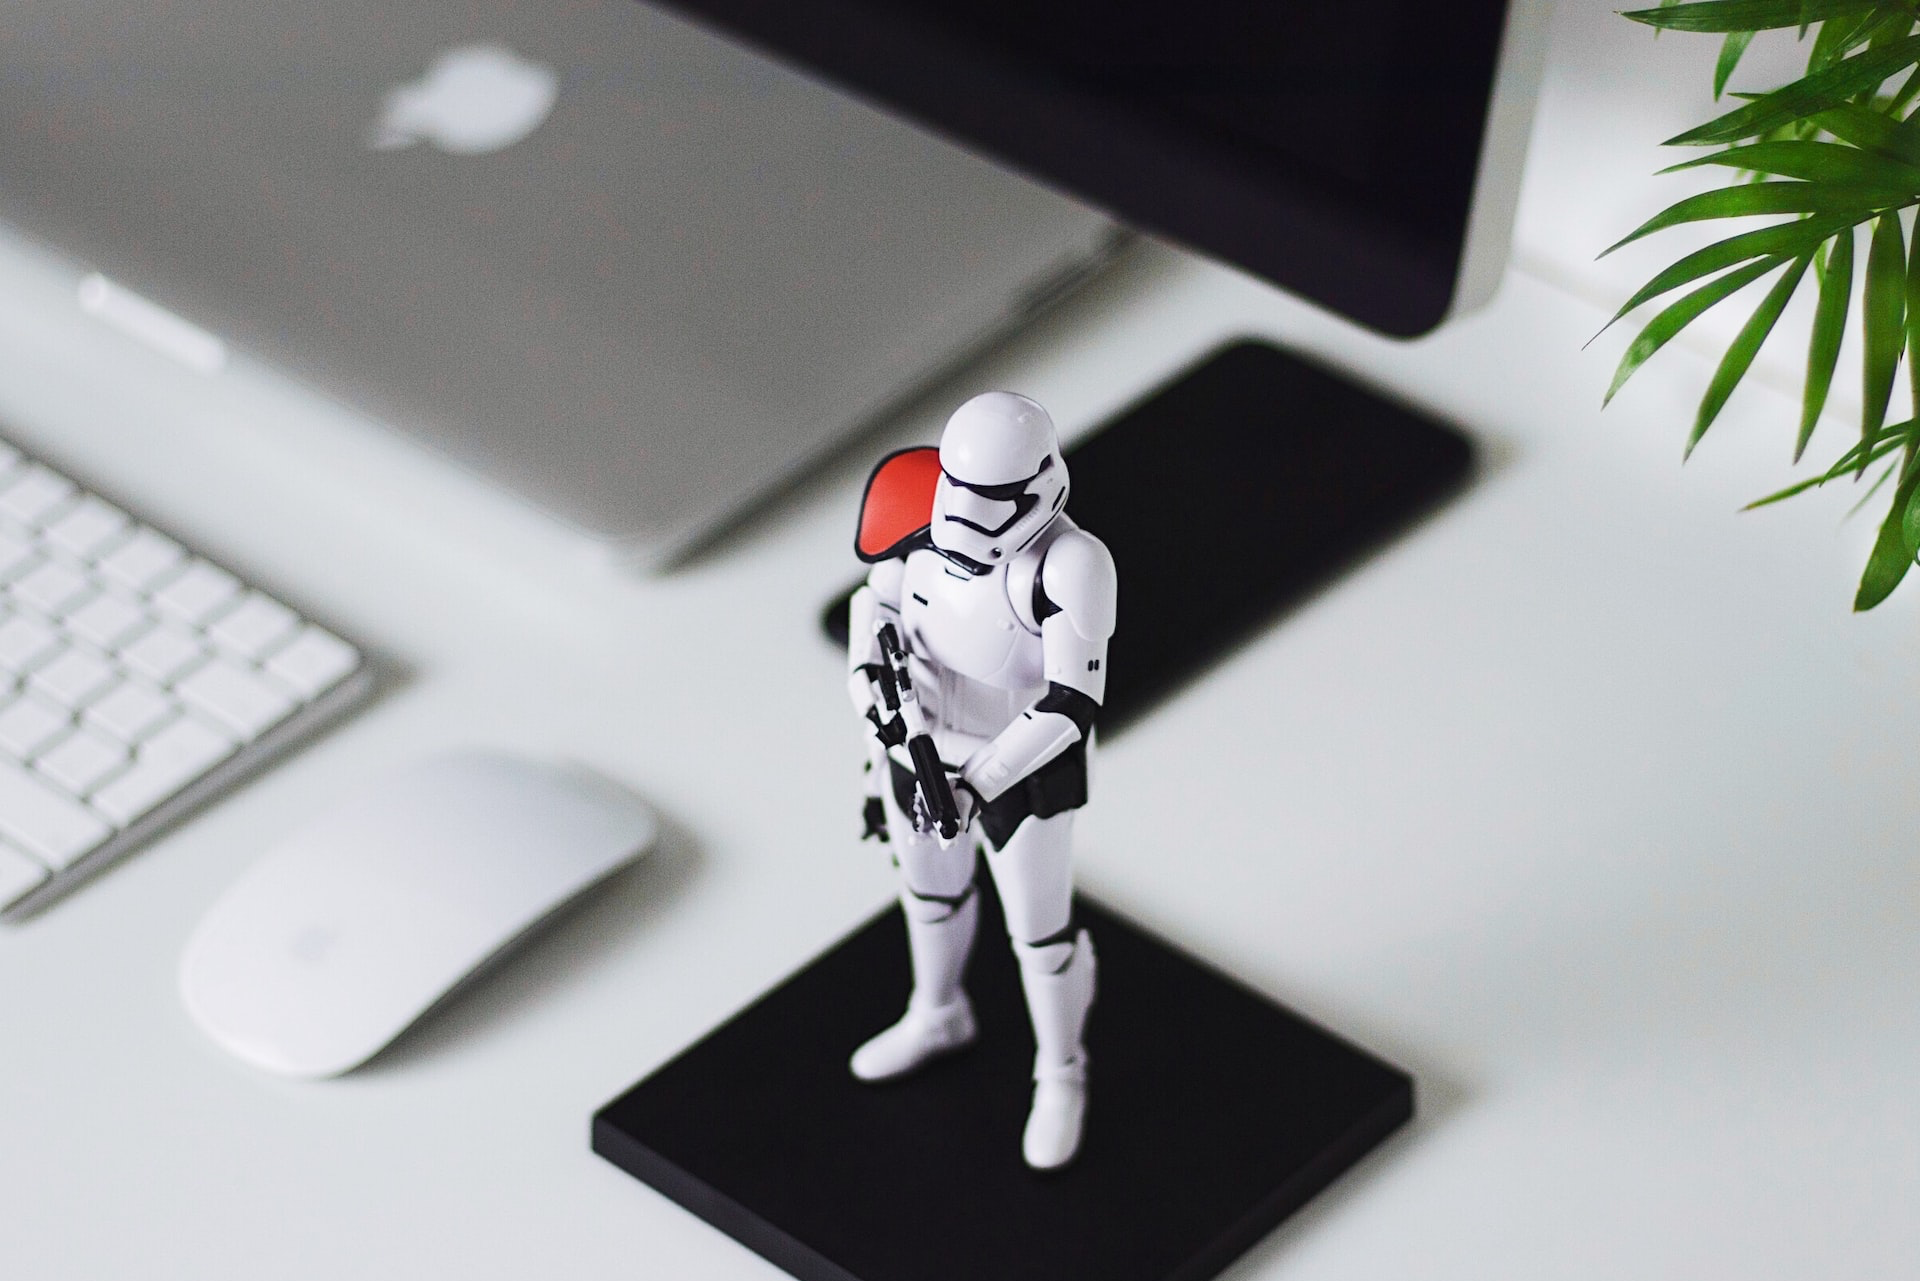 Star Wars Stormtropper figurine on table